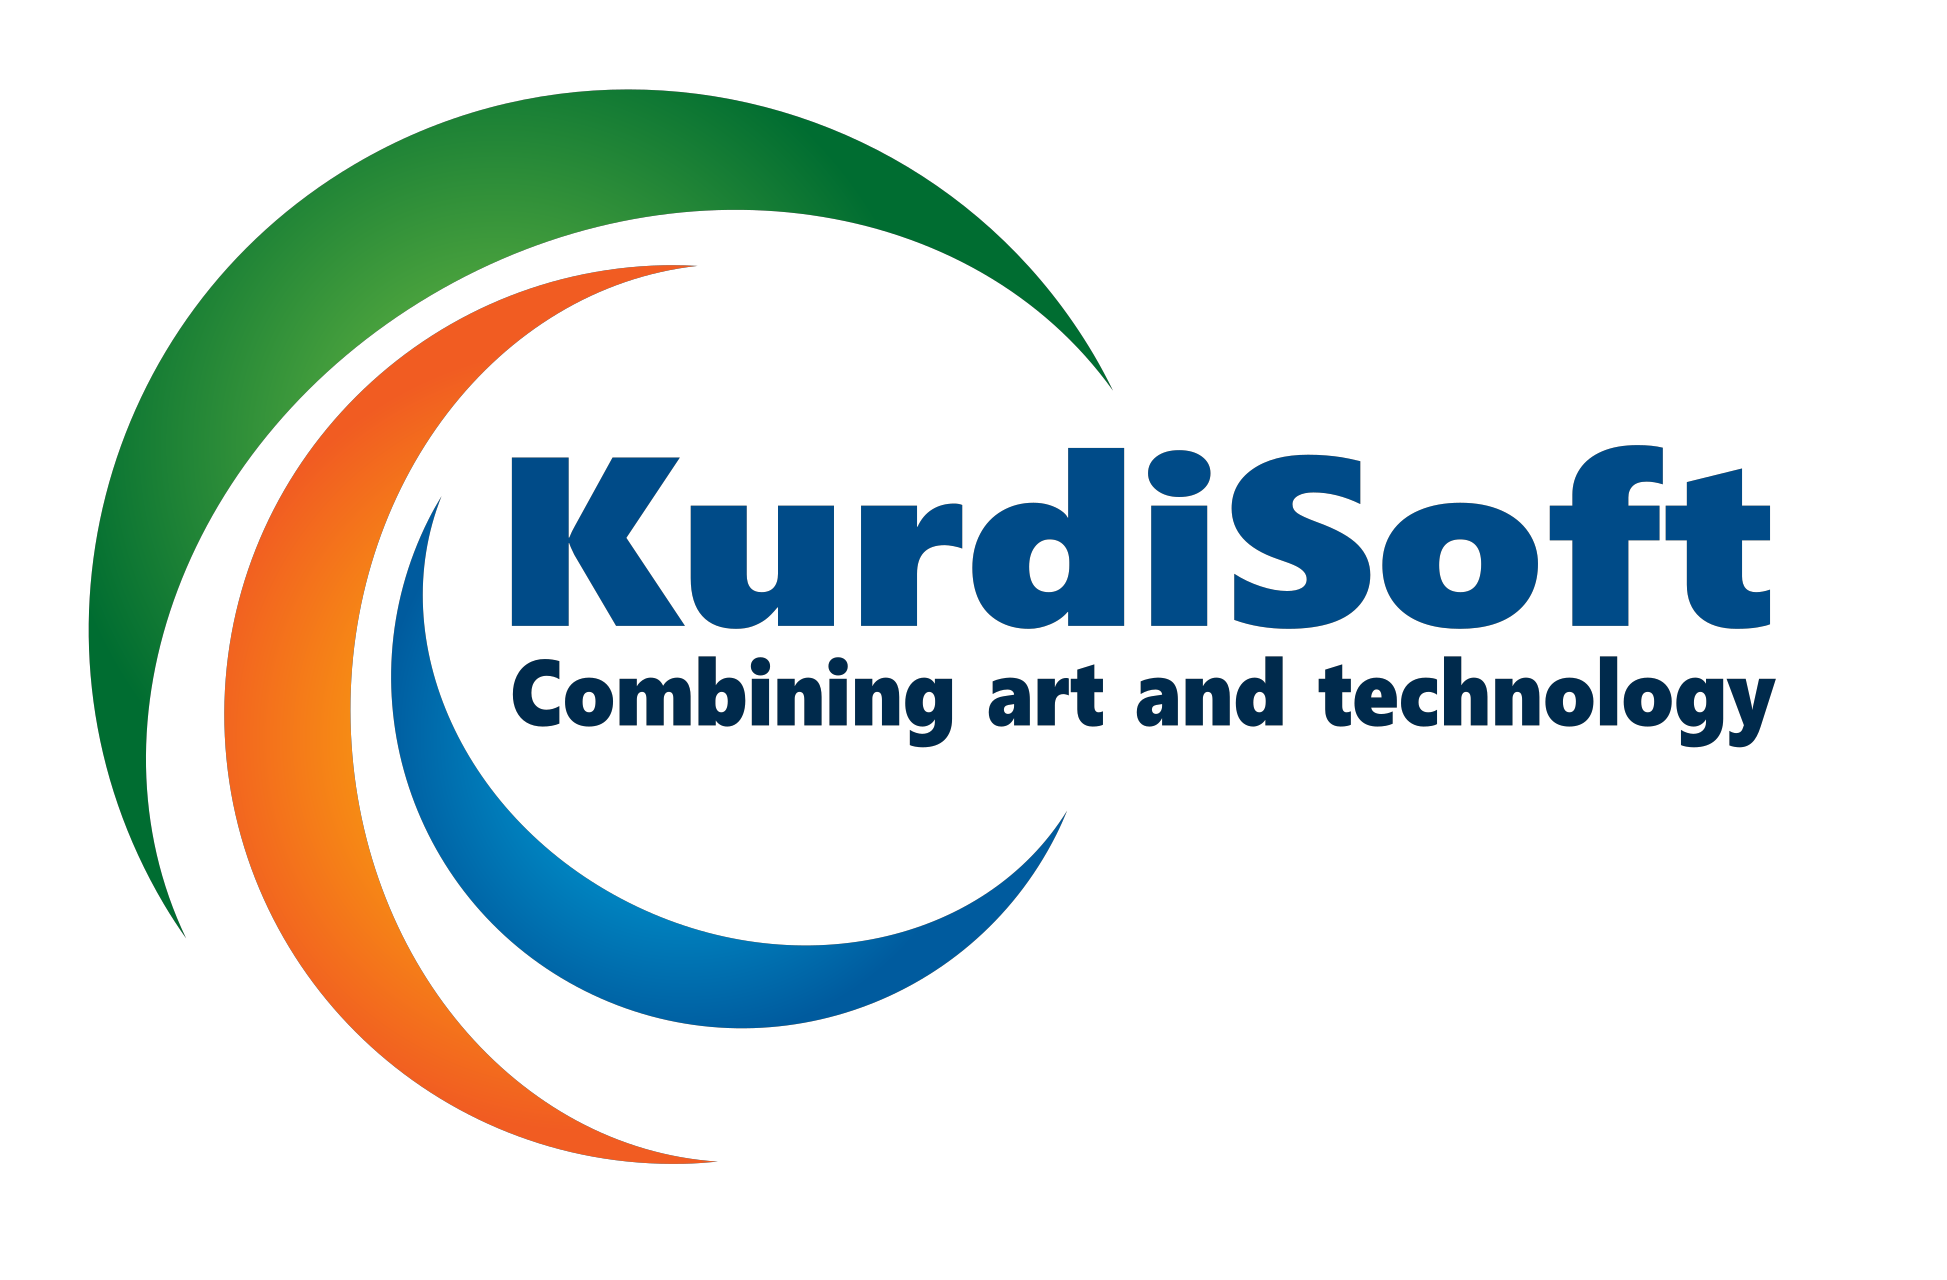 Kurdisoft logo